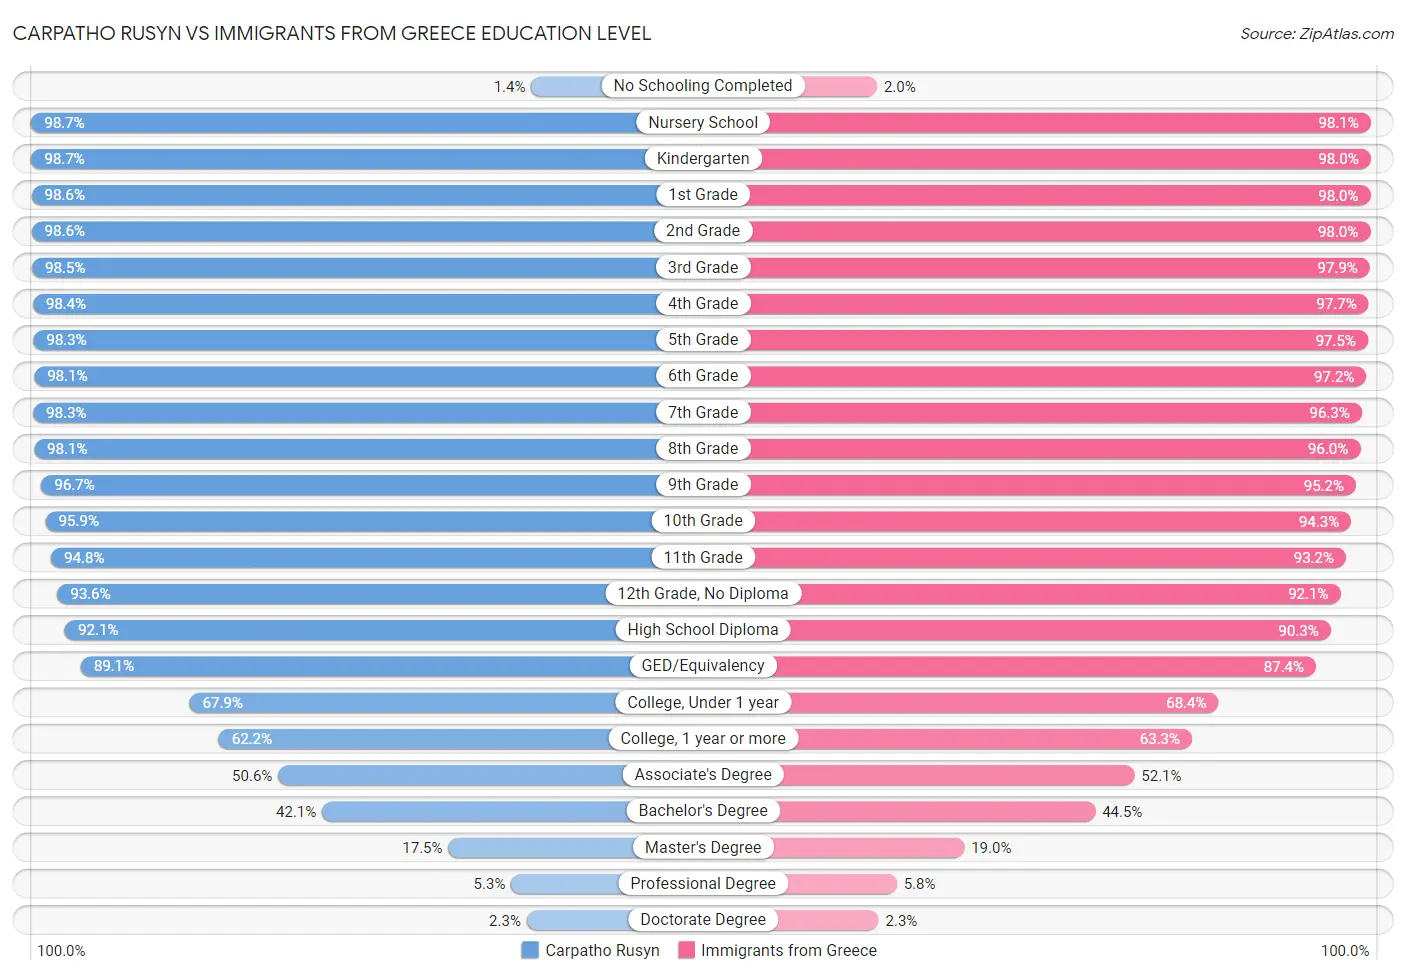 Carpatho Rusyn vs Immigrants from Greece Education Level